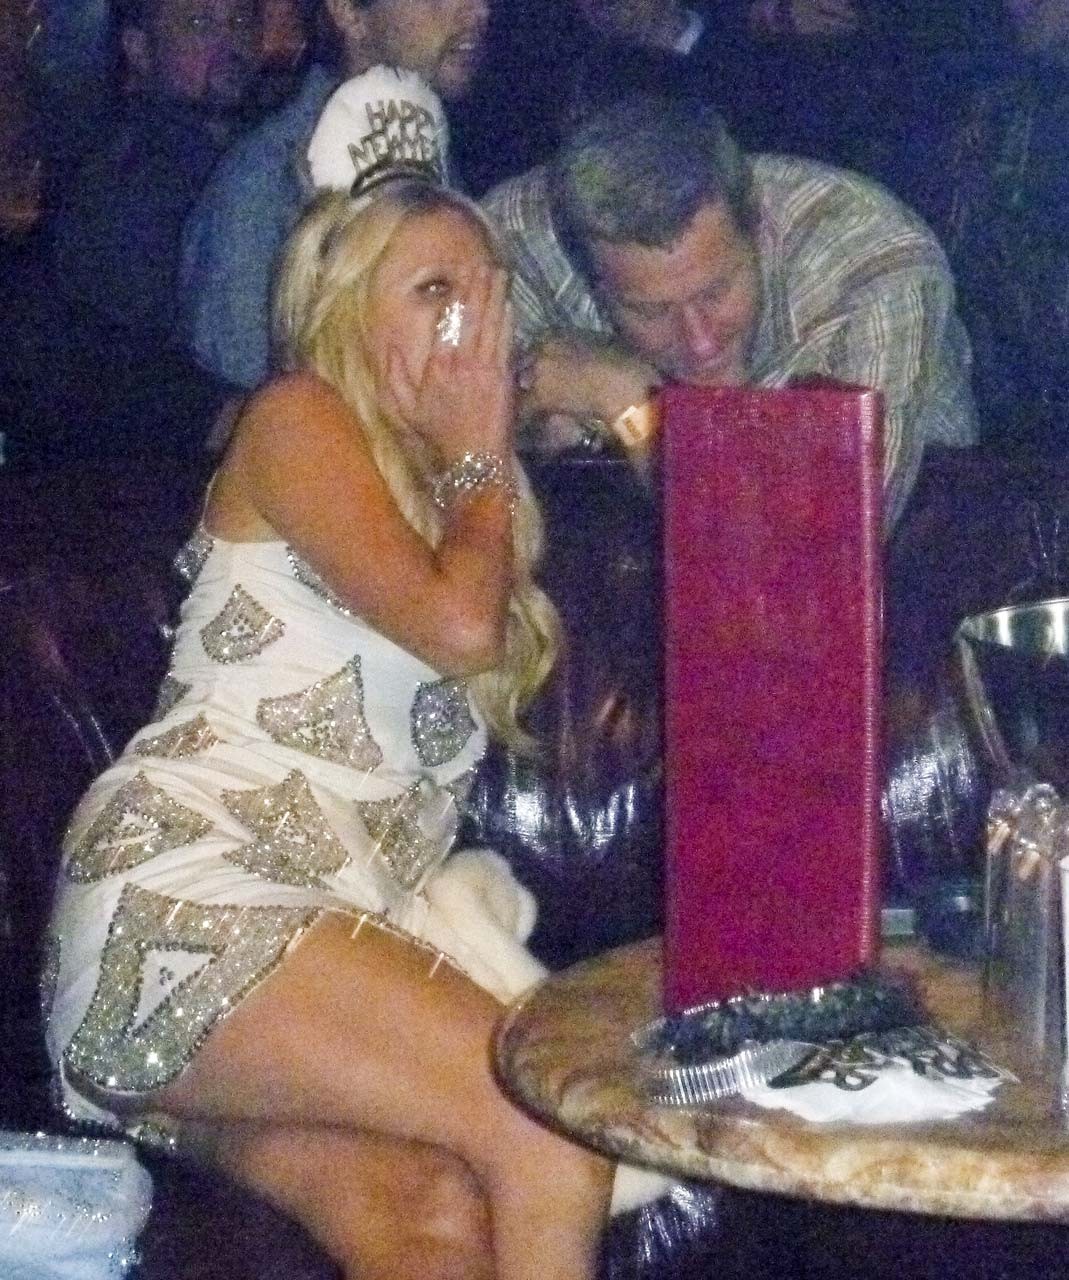 Paris Hilton flashing her bare ass in mini skirt upskirt and bikini on seaside pap